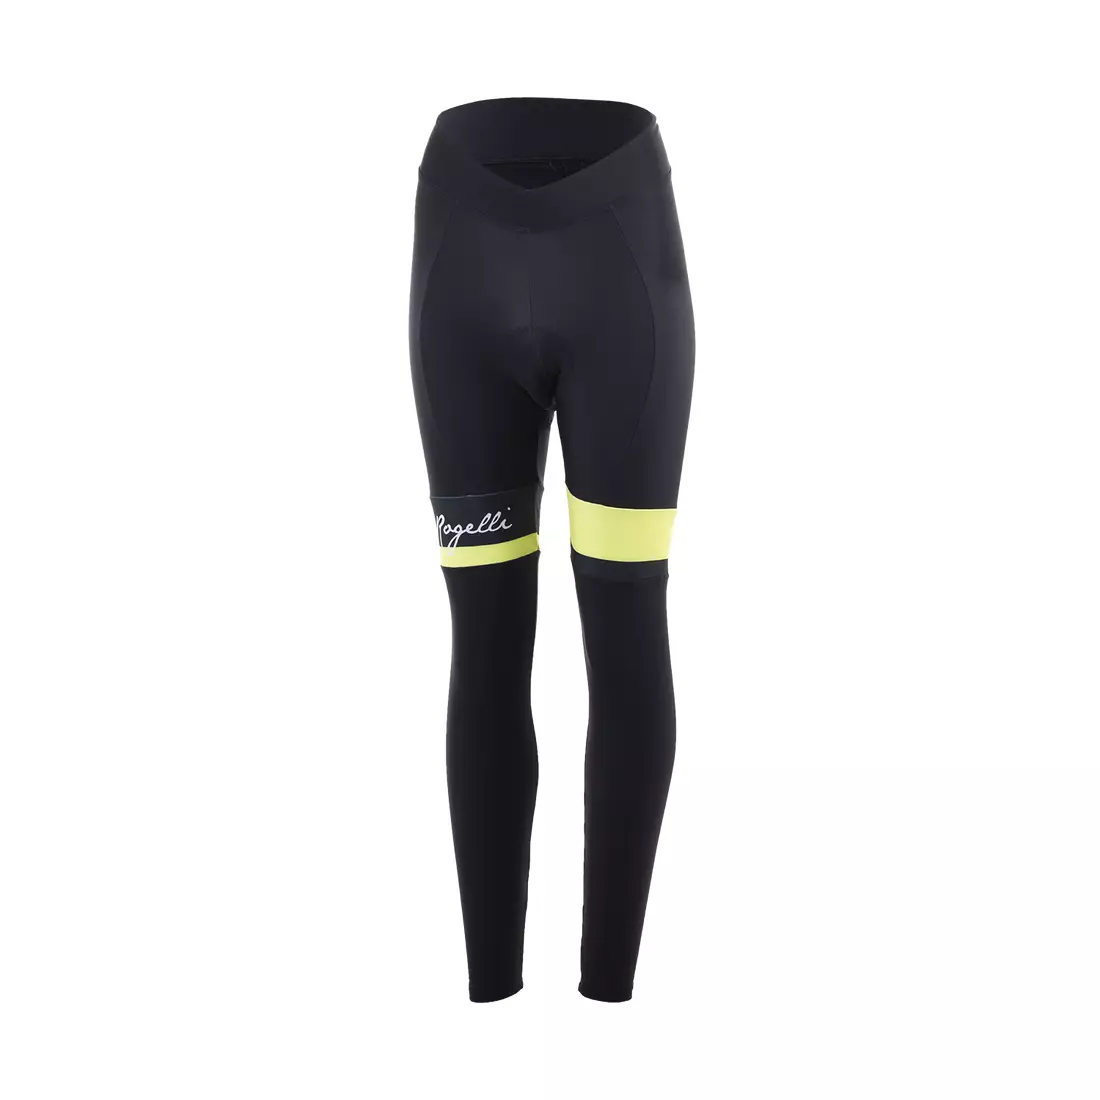 ROGELLI dámské zimní cyklistické kalhoty SELECT black/yellow